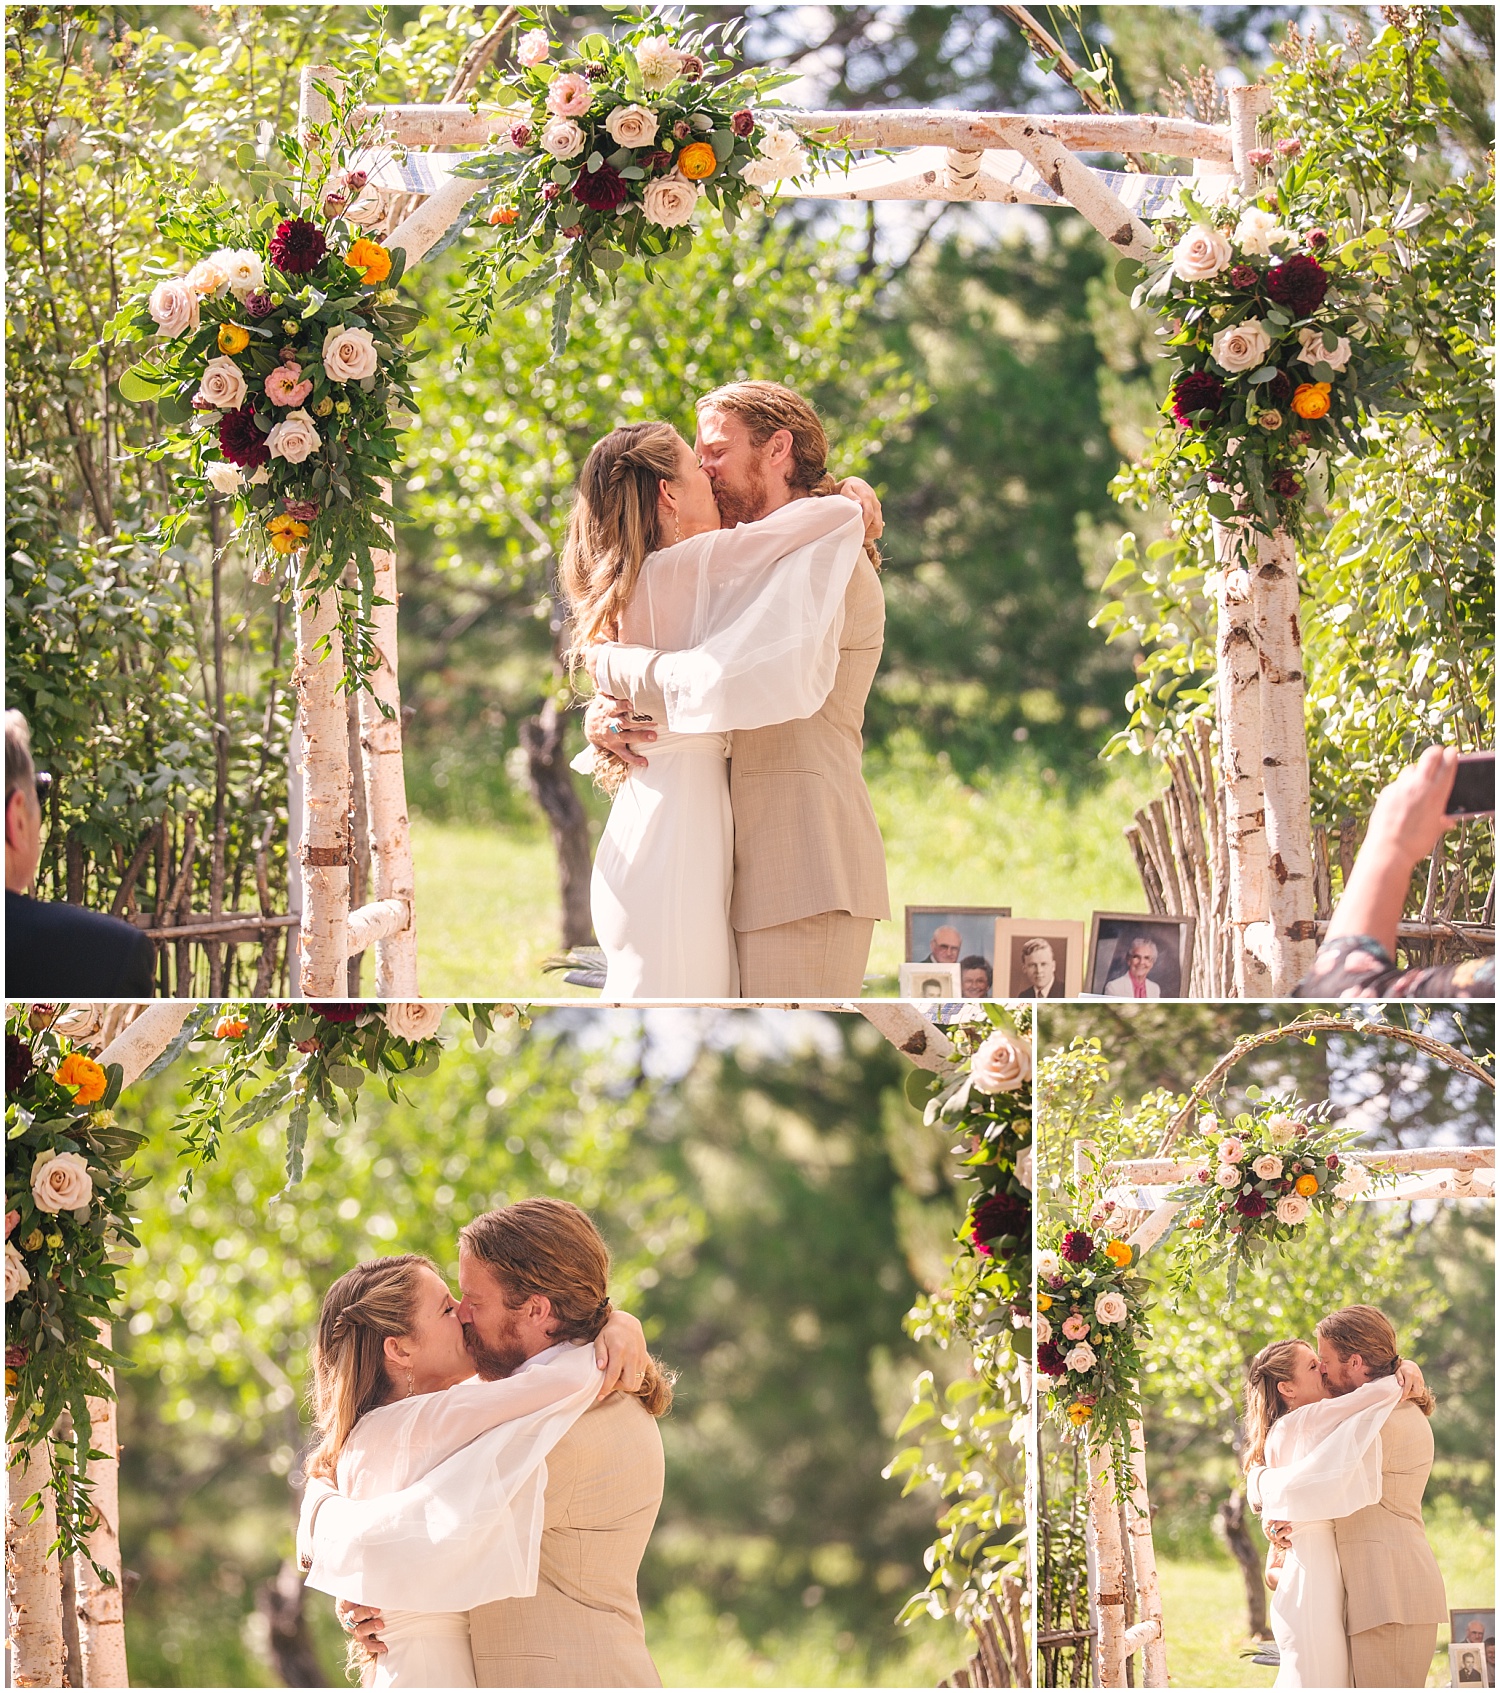 Bride and groom first kiss at Lone Hawk Farm wedding ceremony in Longmont Colorado